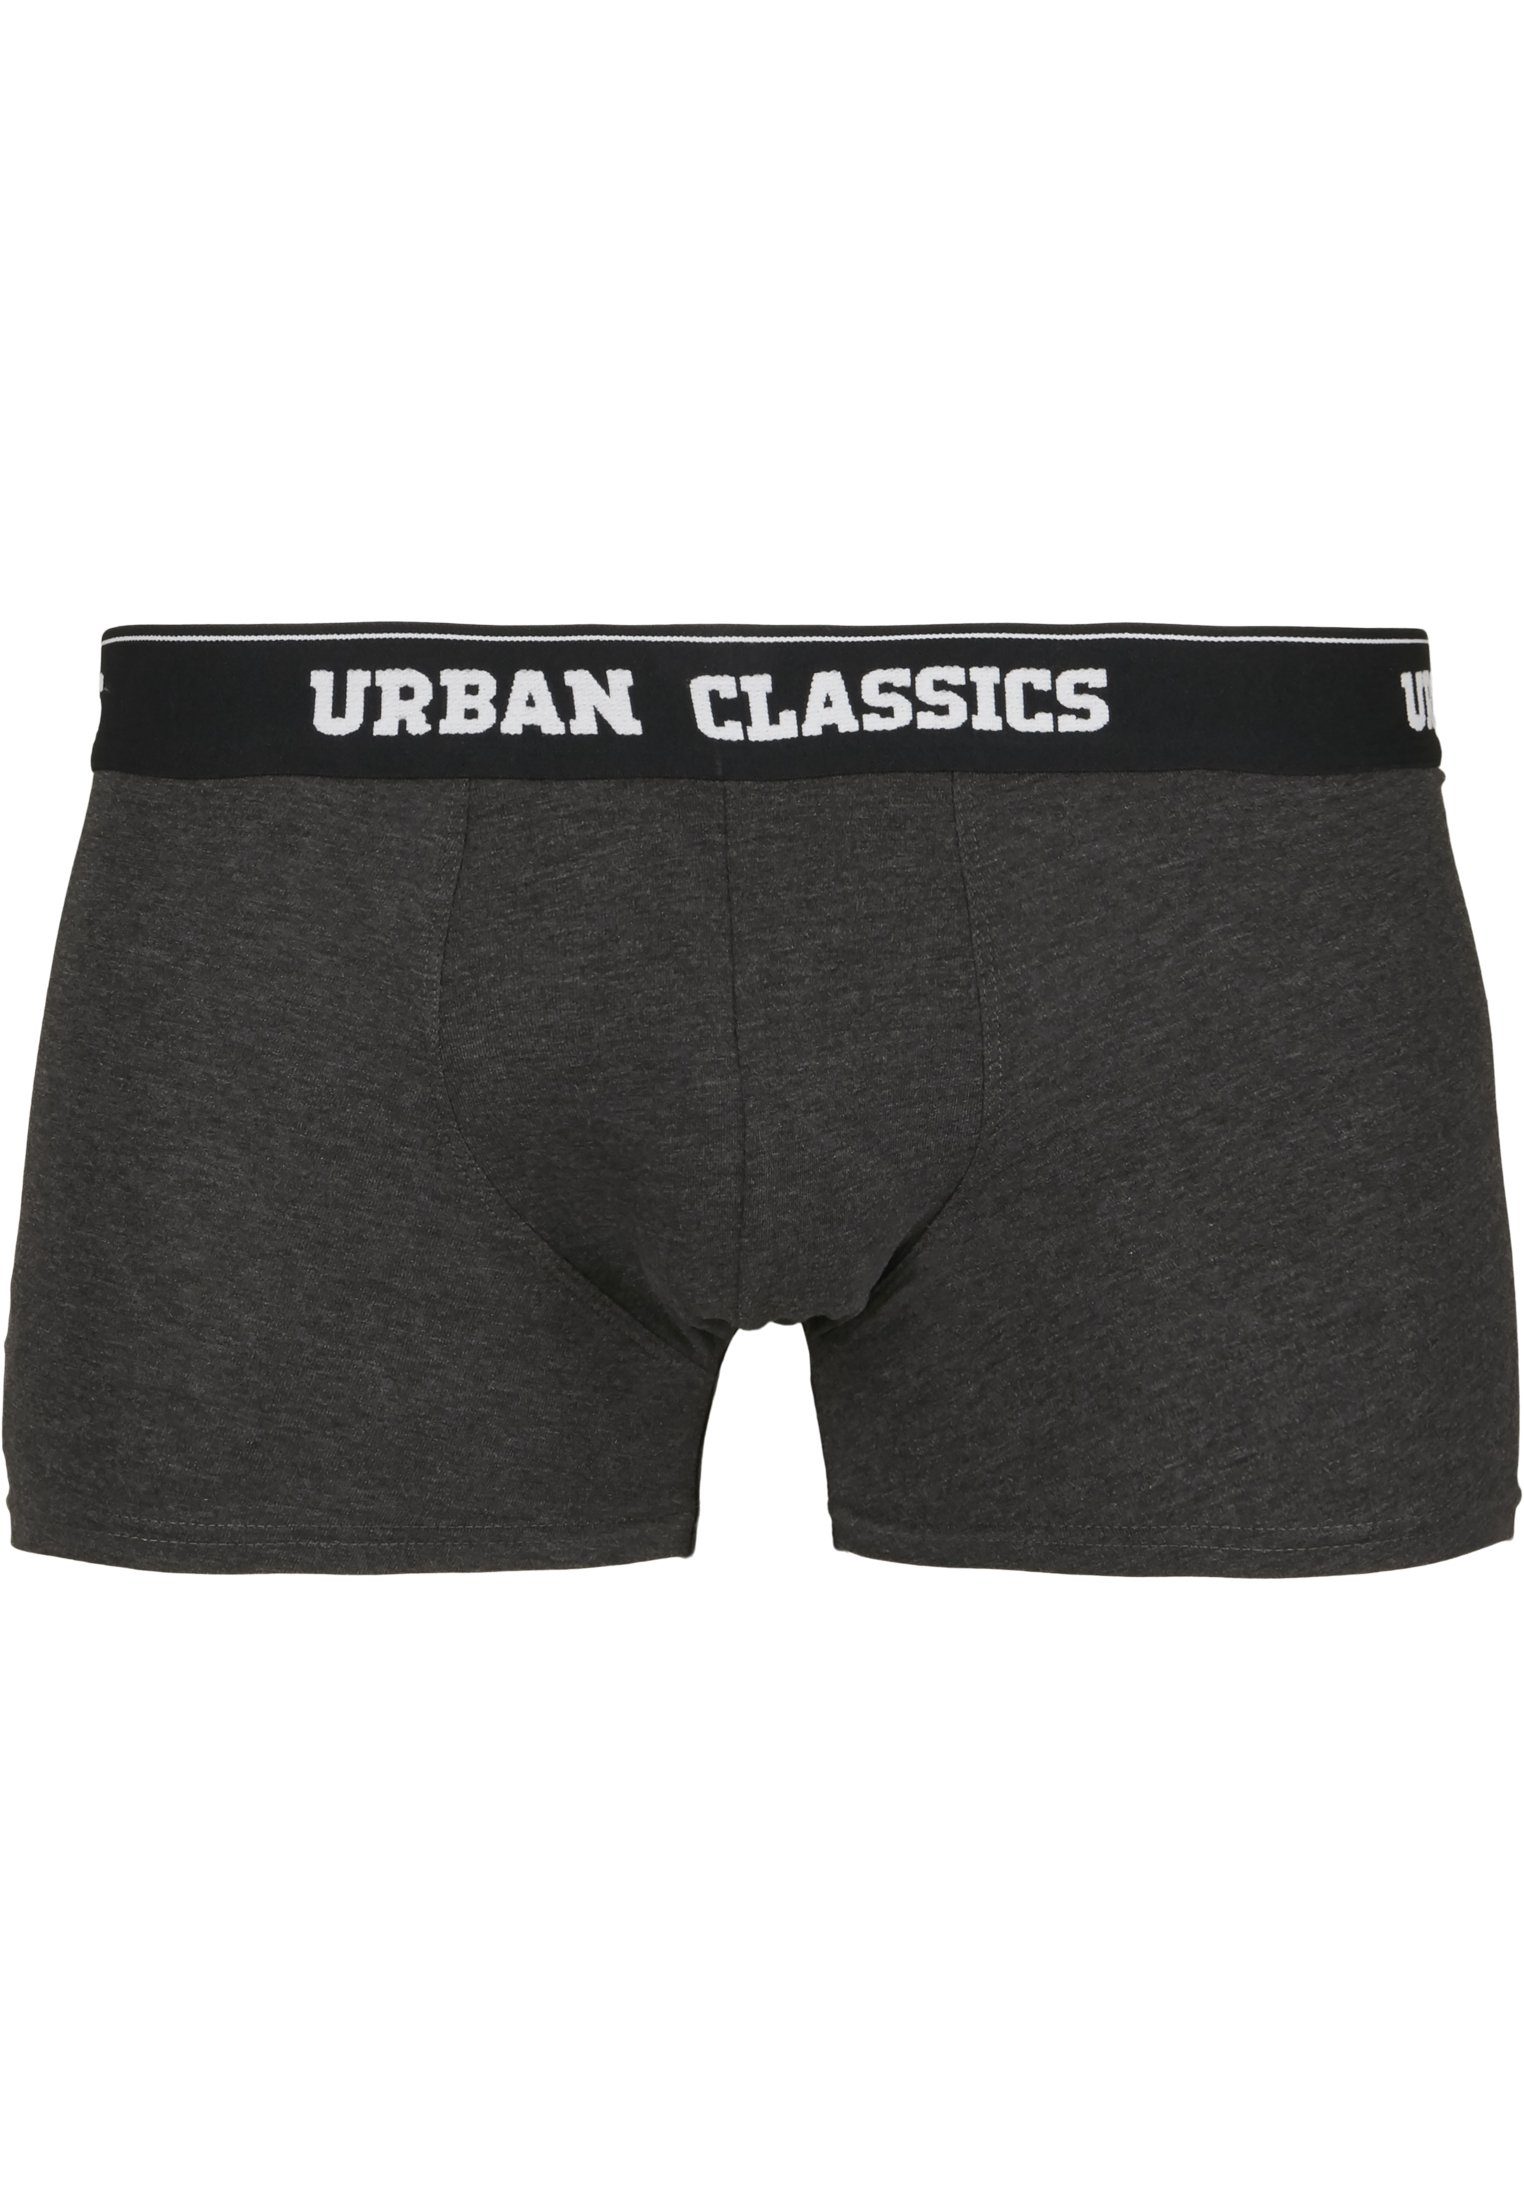 CLASSICS Shorts Herren brand.aop/charcoal/blak/white 5-Pack Boxershorts (1-St) Boxer URBAN